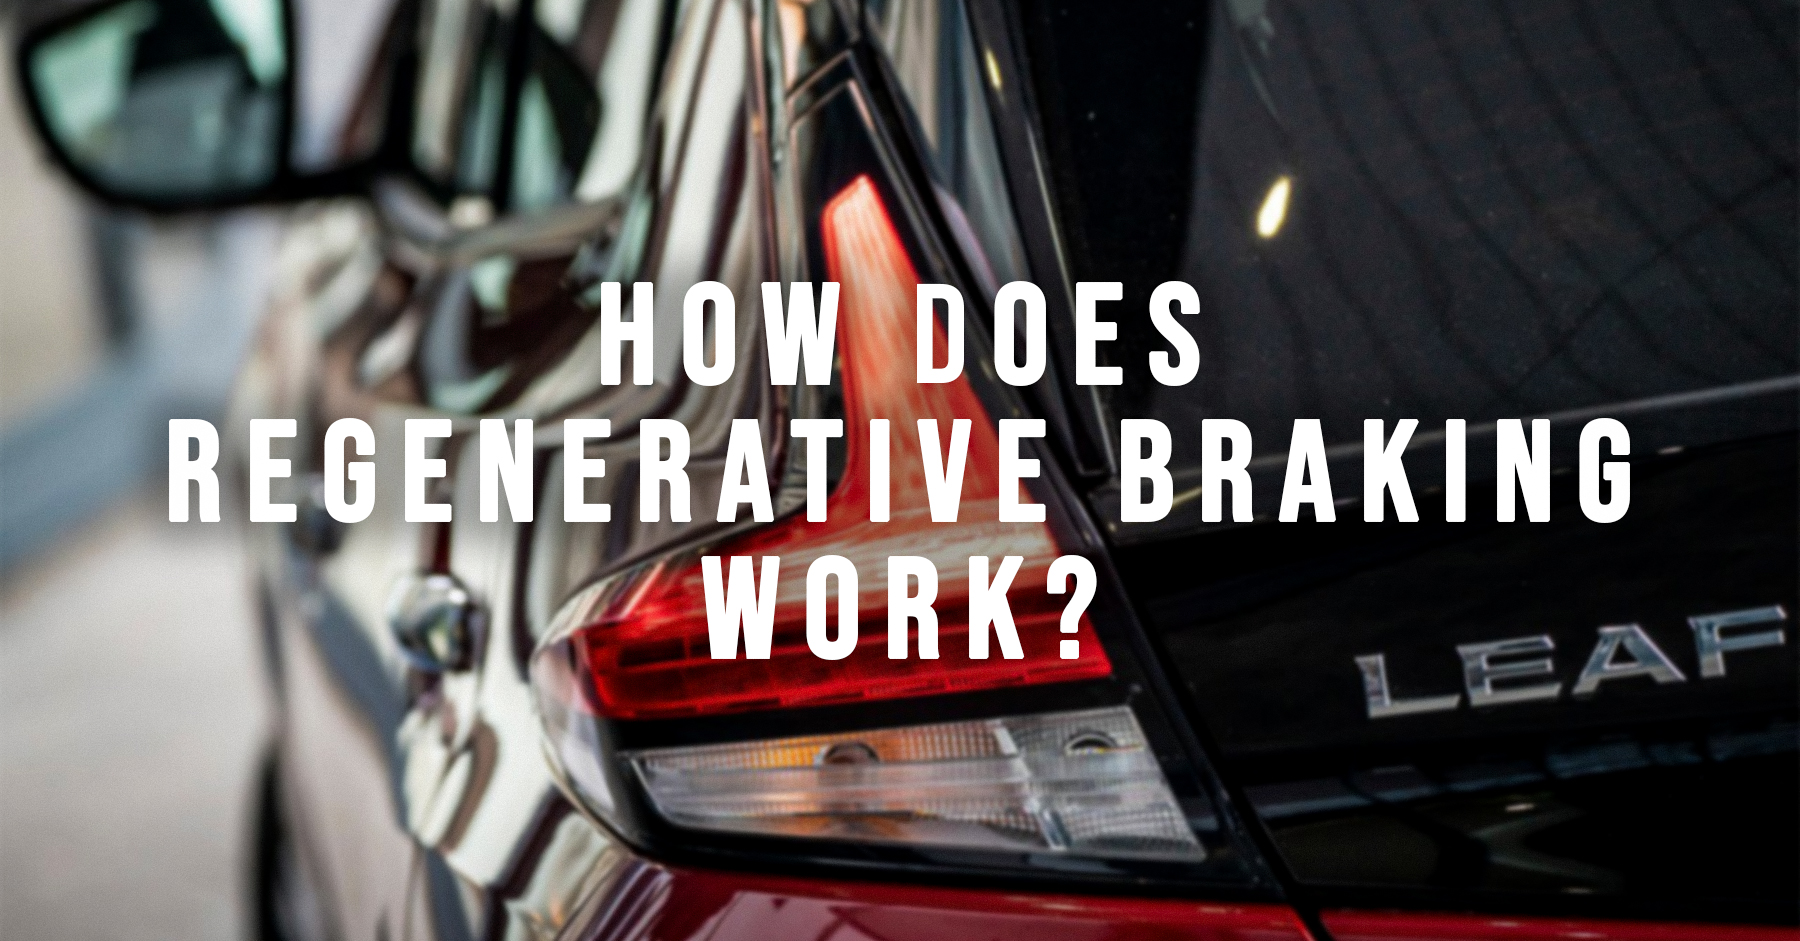 How does regenerative braking work?